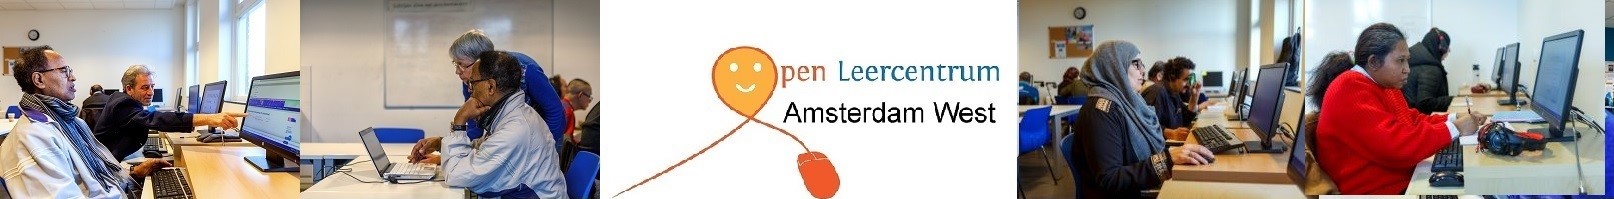 (c) Openleercentrum.com